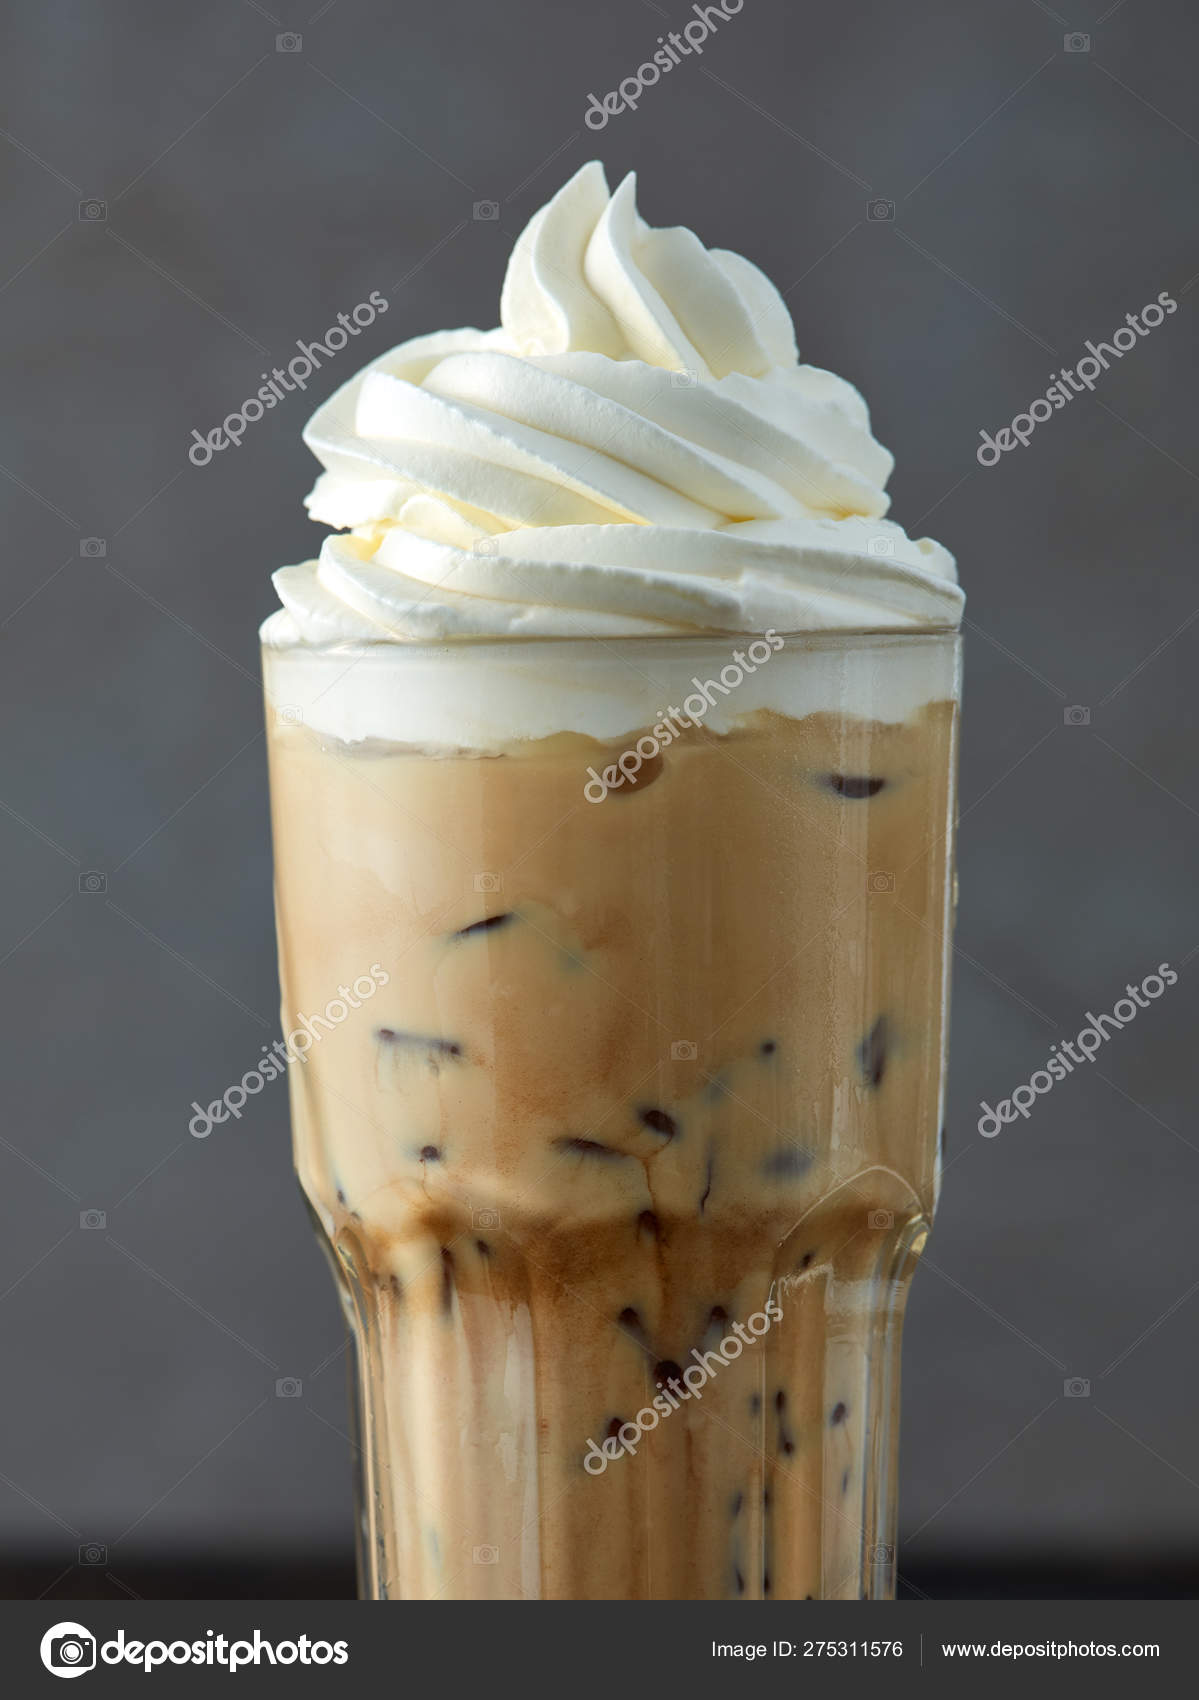 https://st4.depositphotos.com/1000504/27531/i/1600/depositphotos_275311576-stock-photo-iced-coffee-latte-with-whipped.jpg